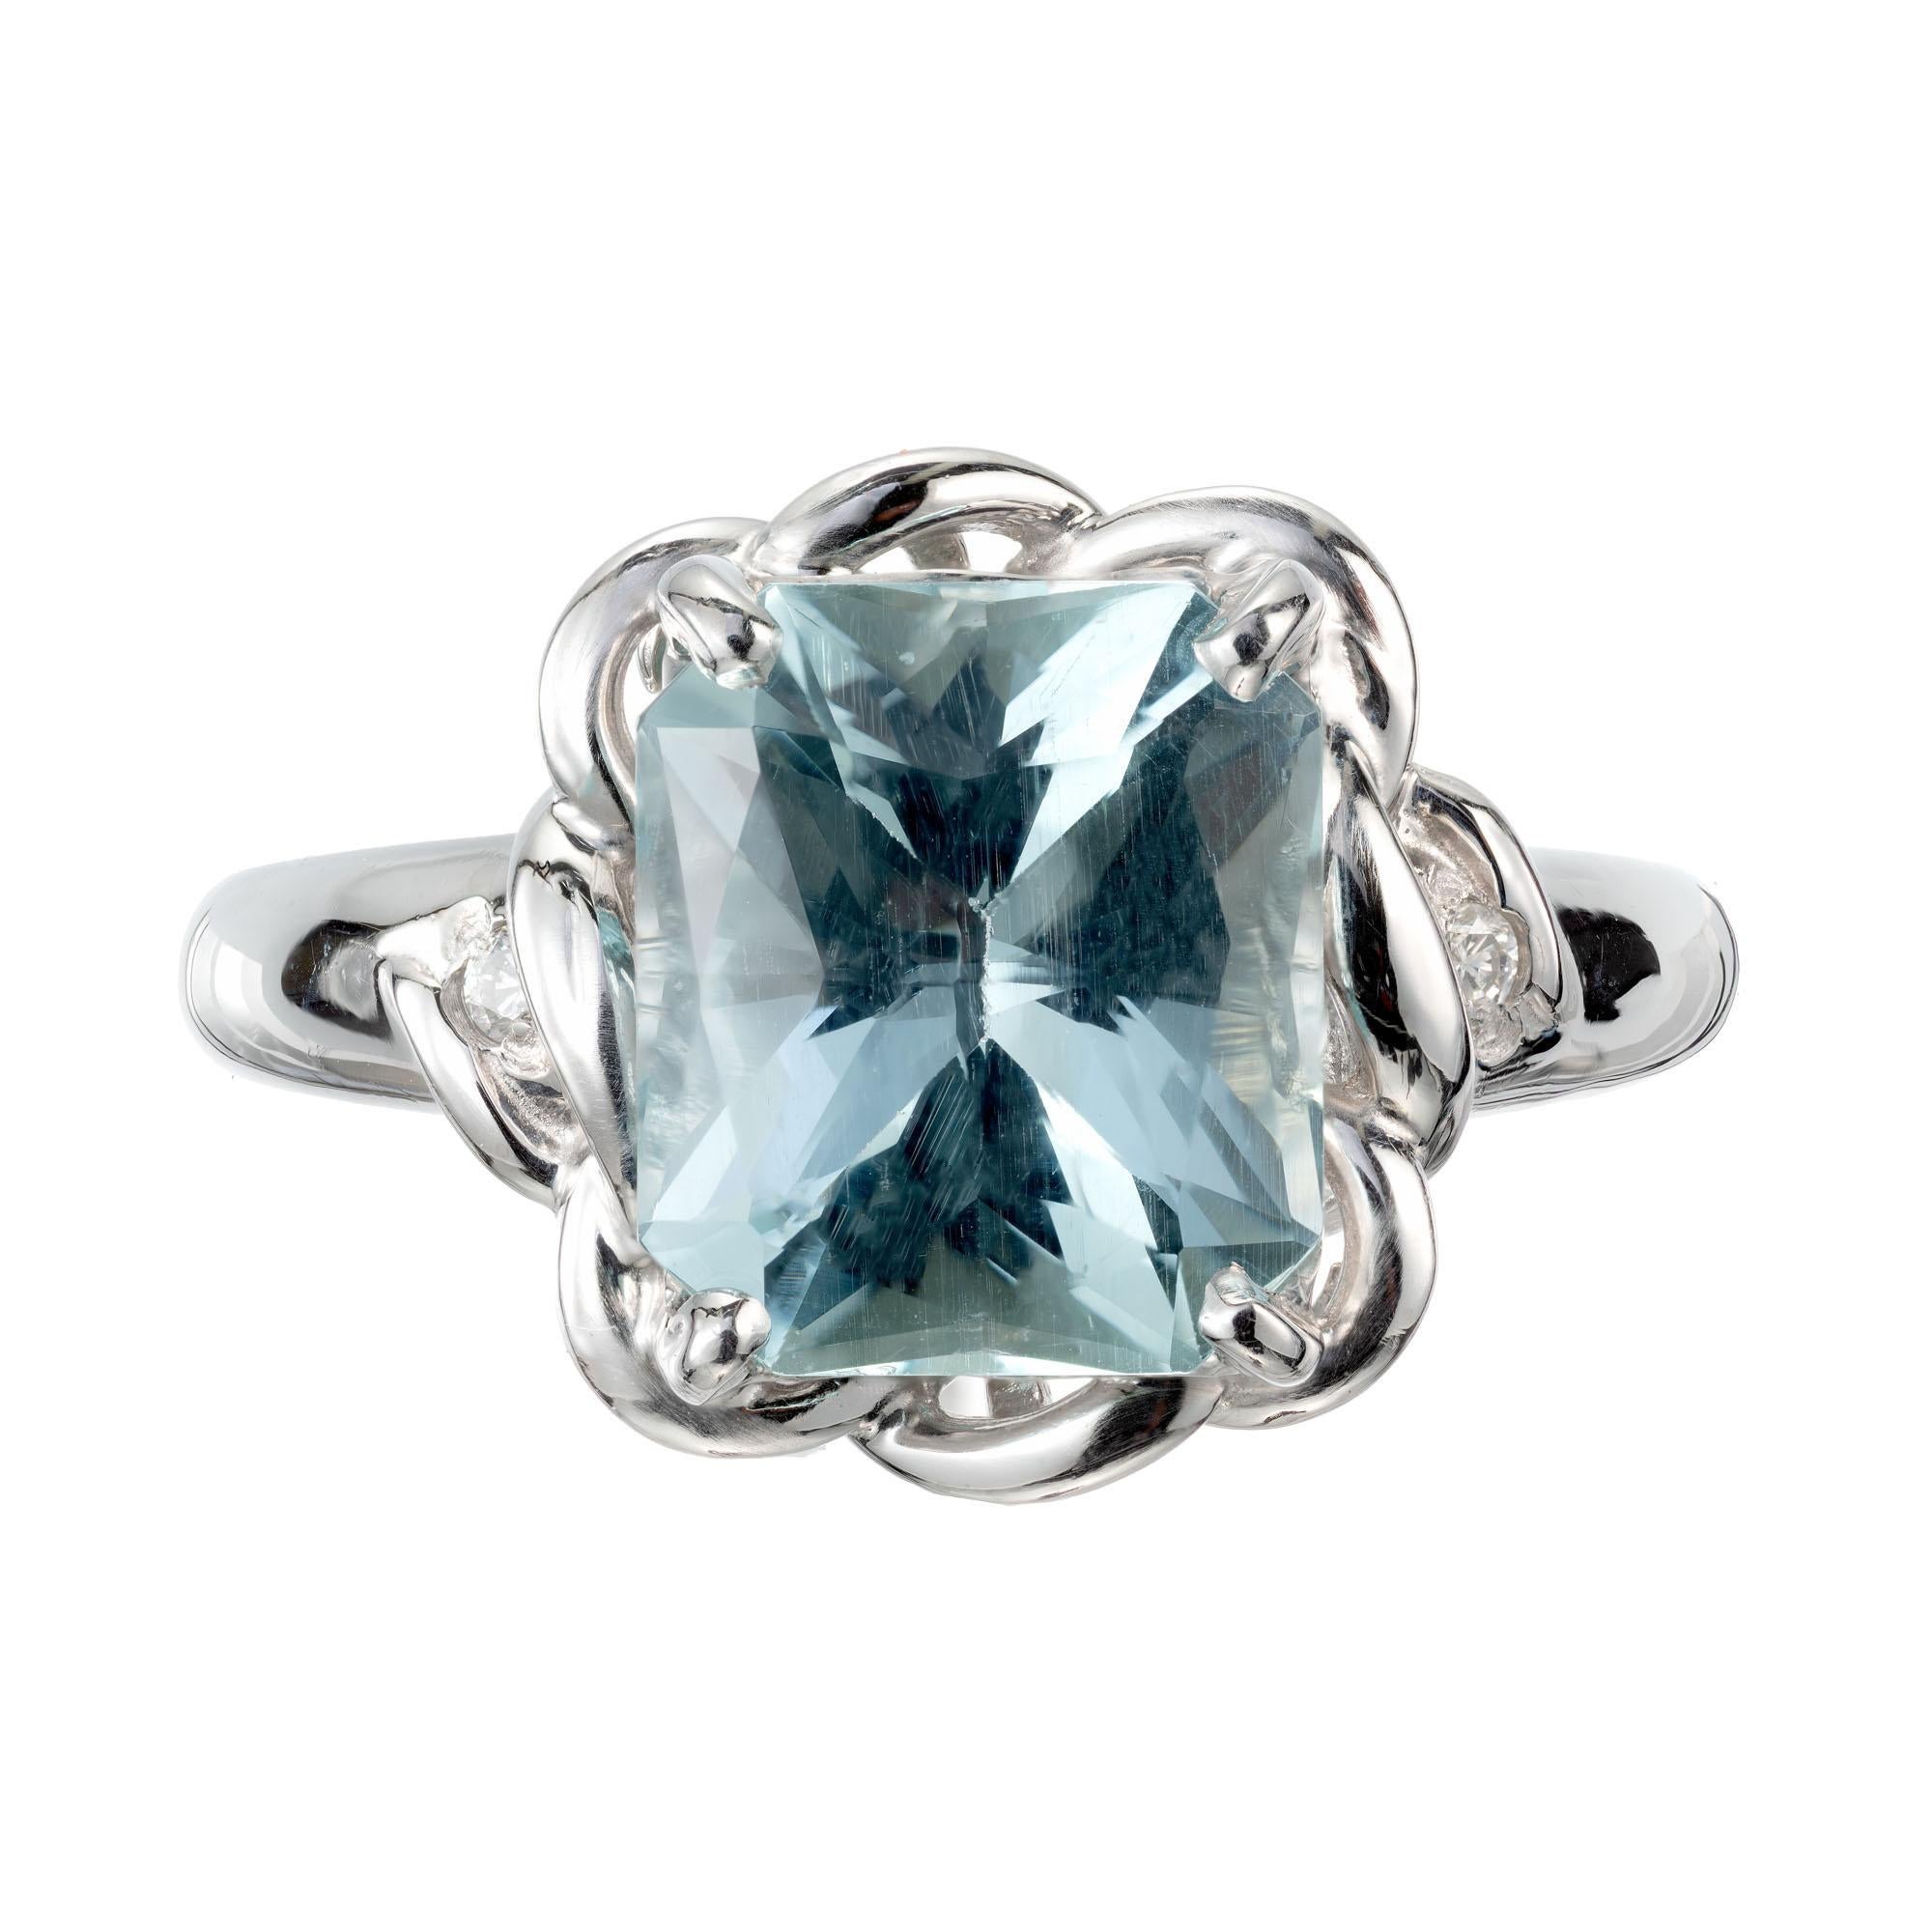 Vintage 1950 2.97 carat natural aqua emerald cut platinum diamond ring

1 cut cornered rectangular greenish blue aquamarine, approx. 2.97cts
2 round brilliant cut diamond H VS, approx. .3ct
Size 6 and sizable
Platinum 
Stamped: PT900
8.7 grams
Width